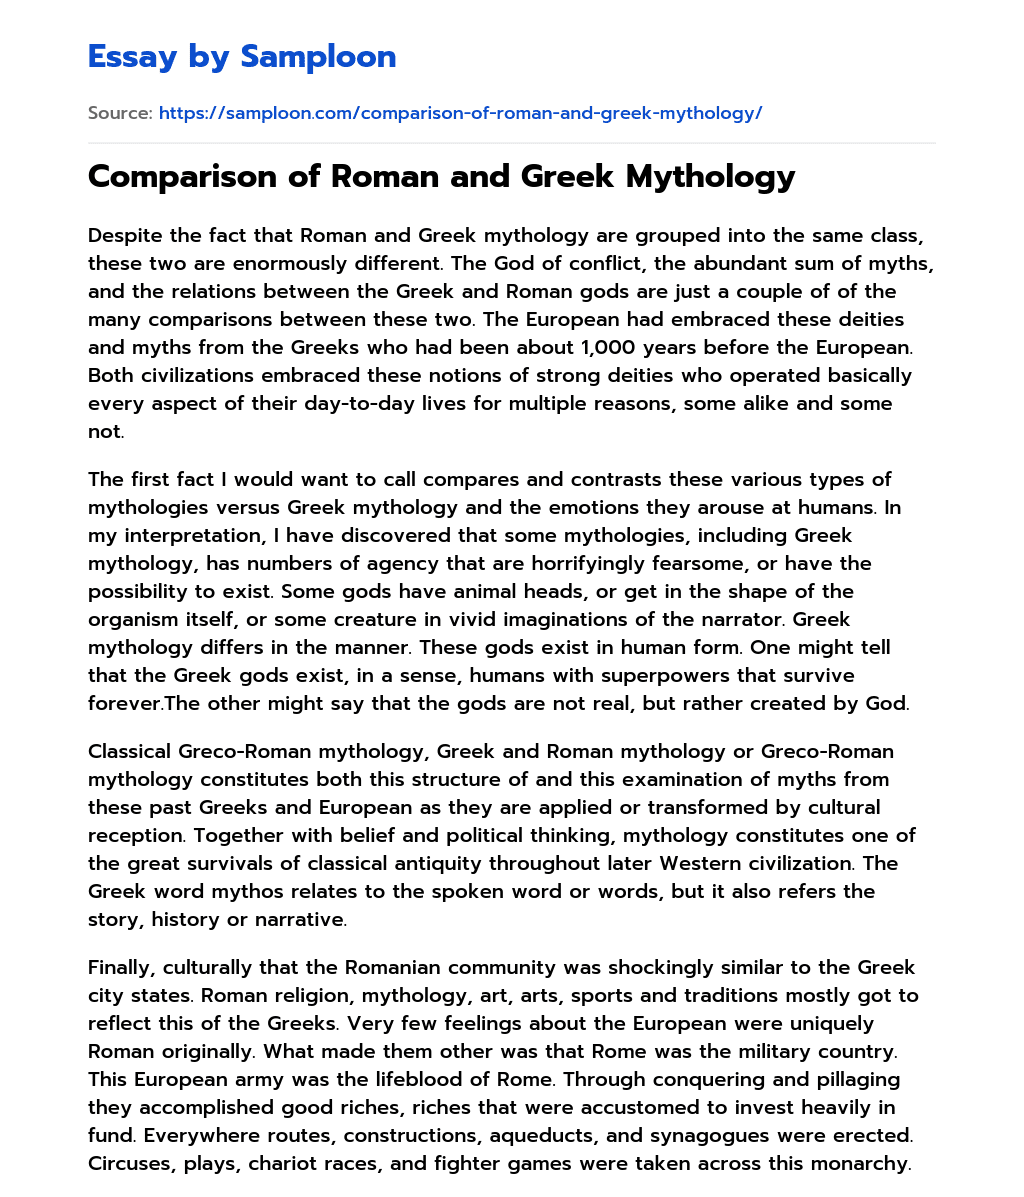 Comparison of Roman and Greek Mythology essay